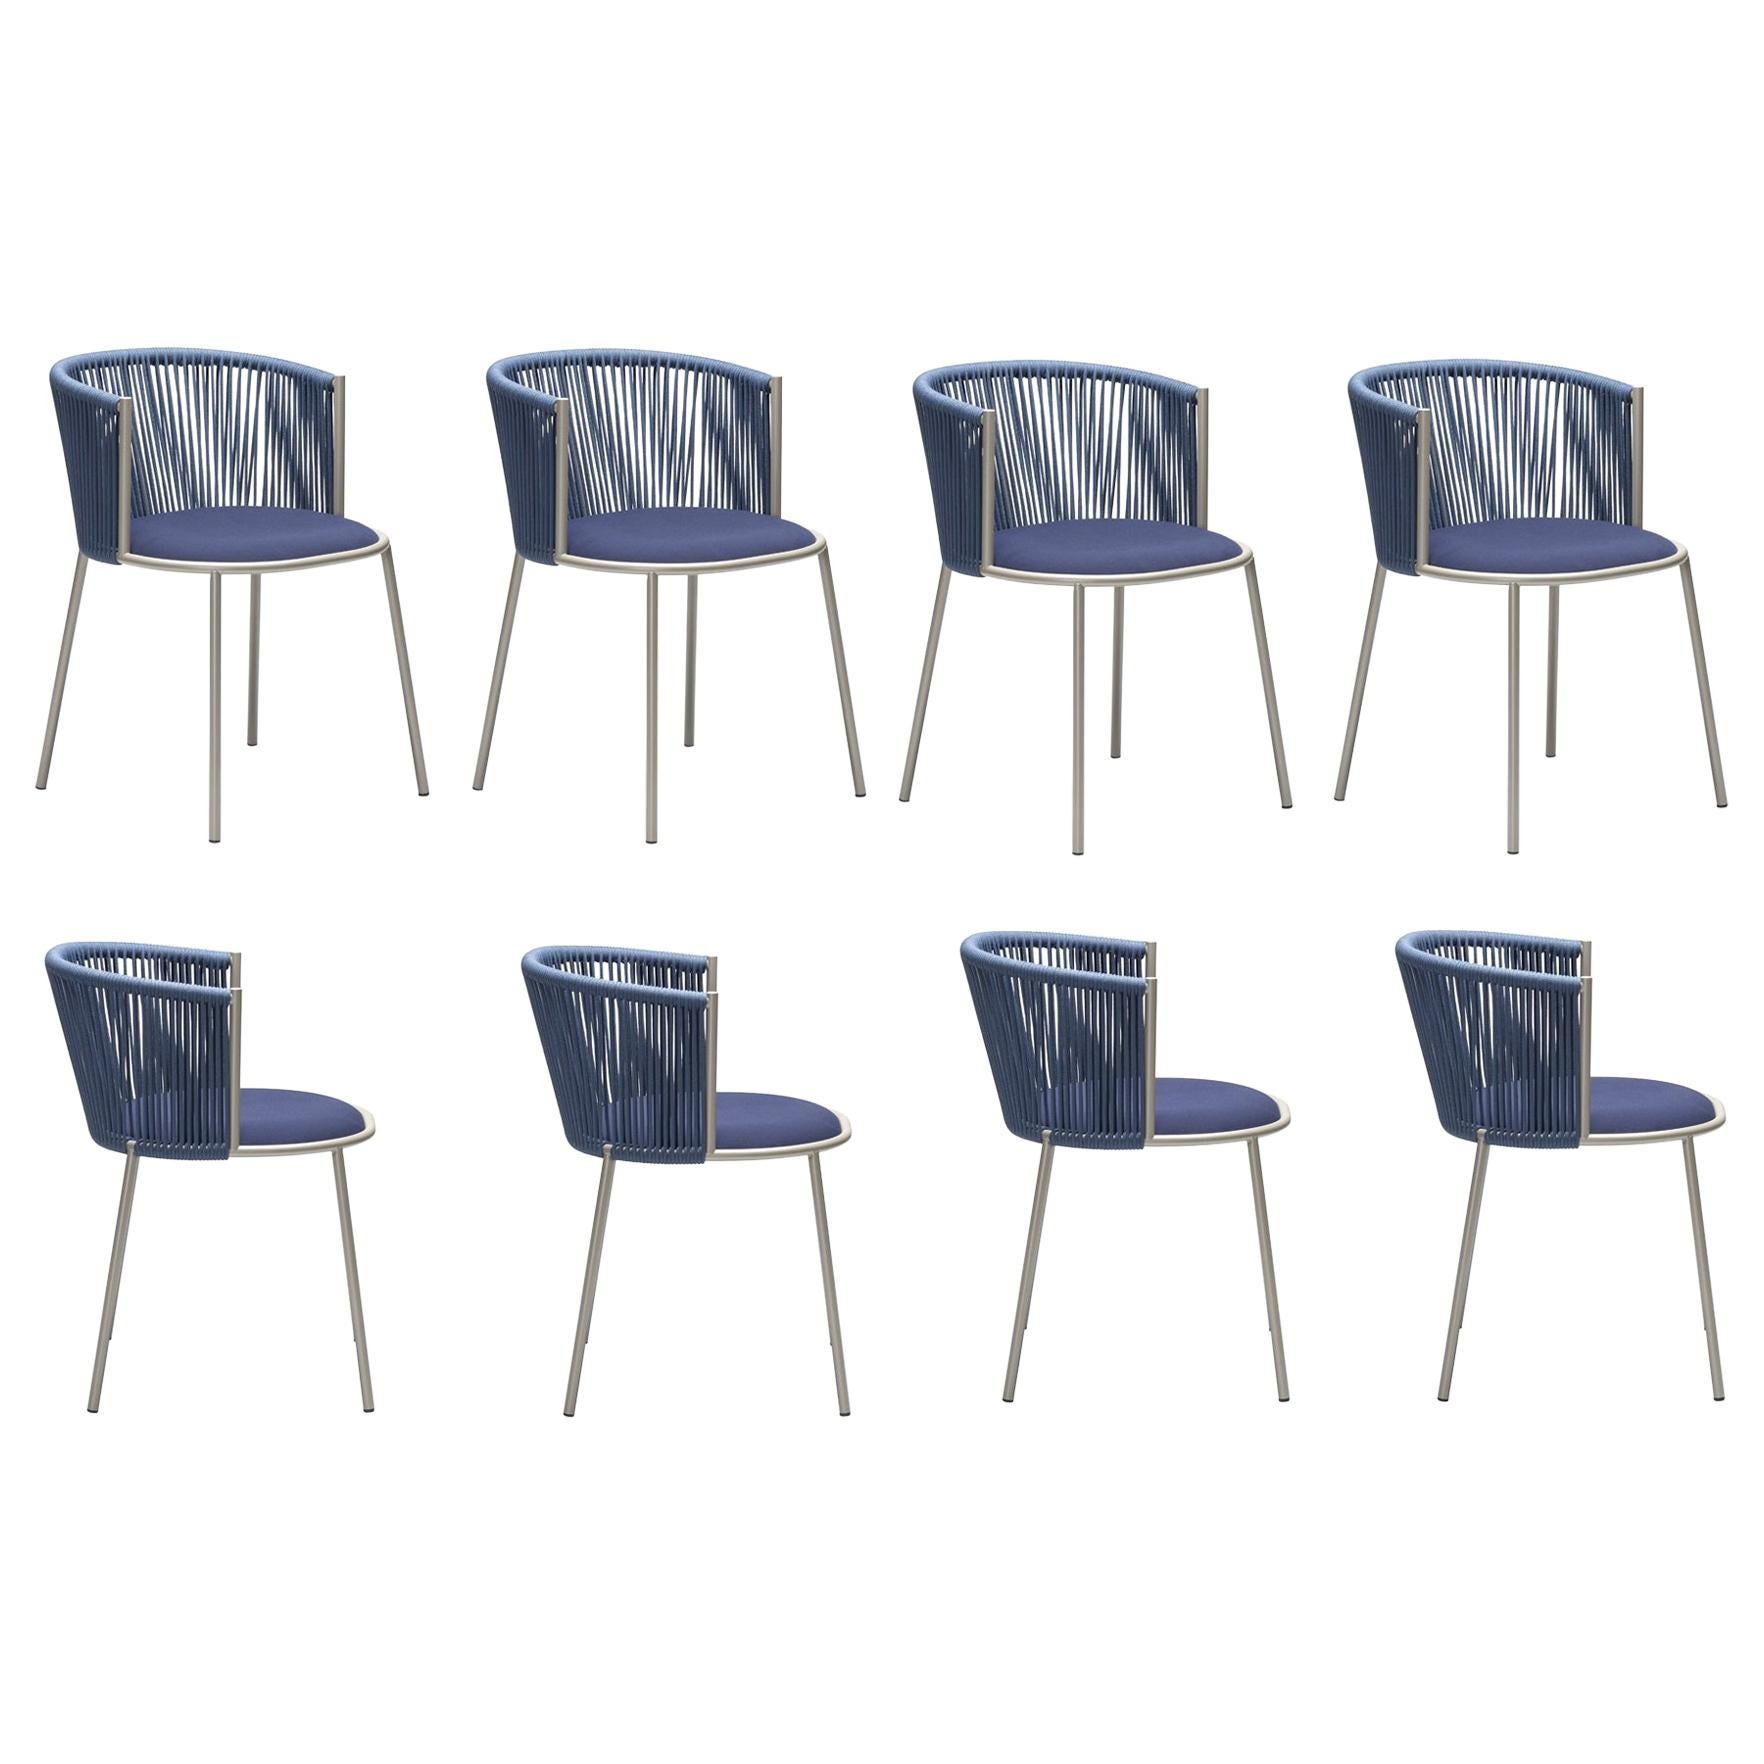 Handmade Italian Garden Chairs in Midnight Blue